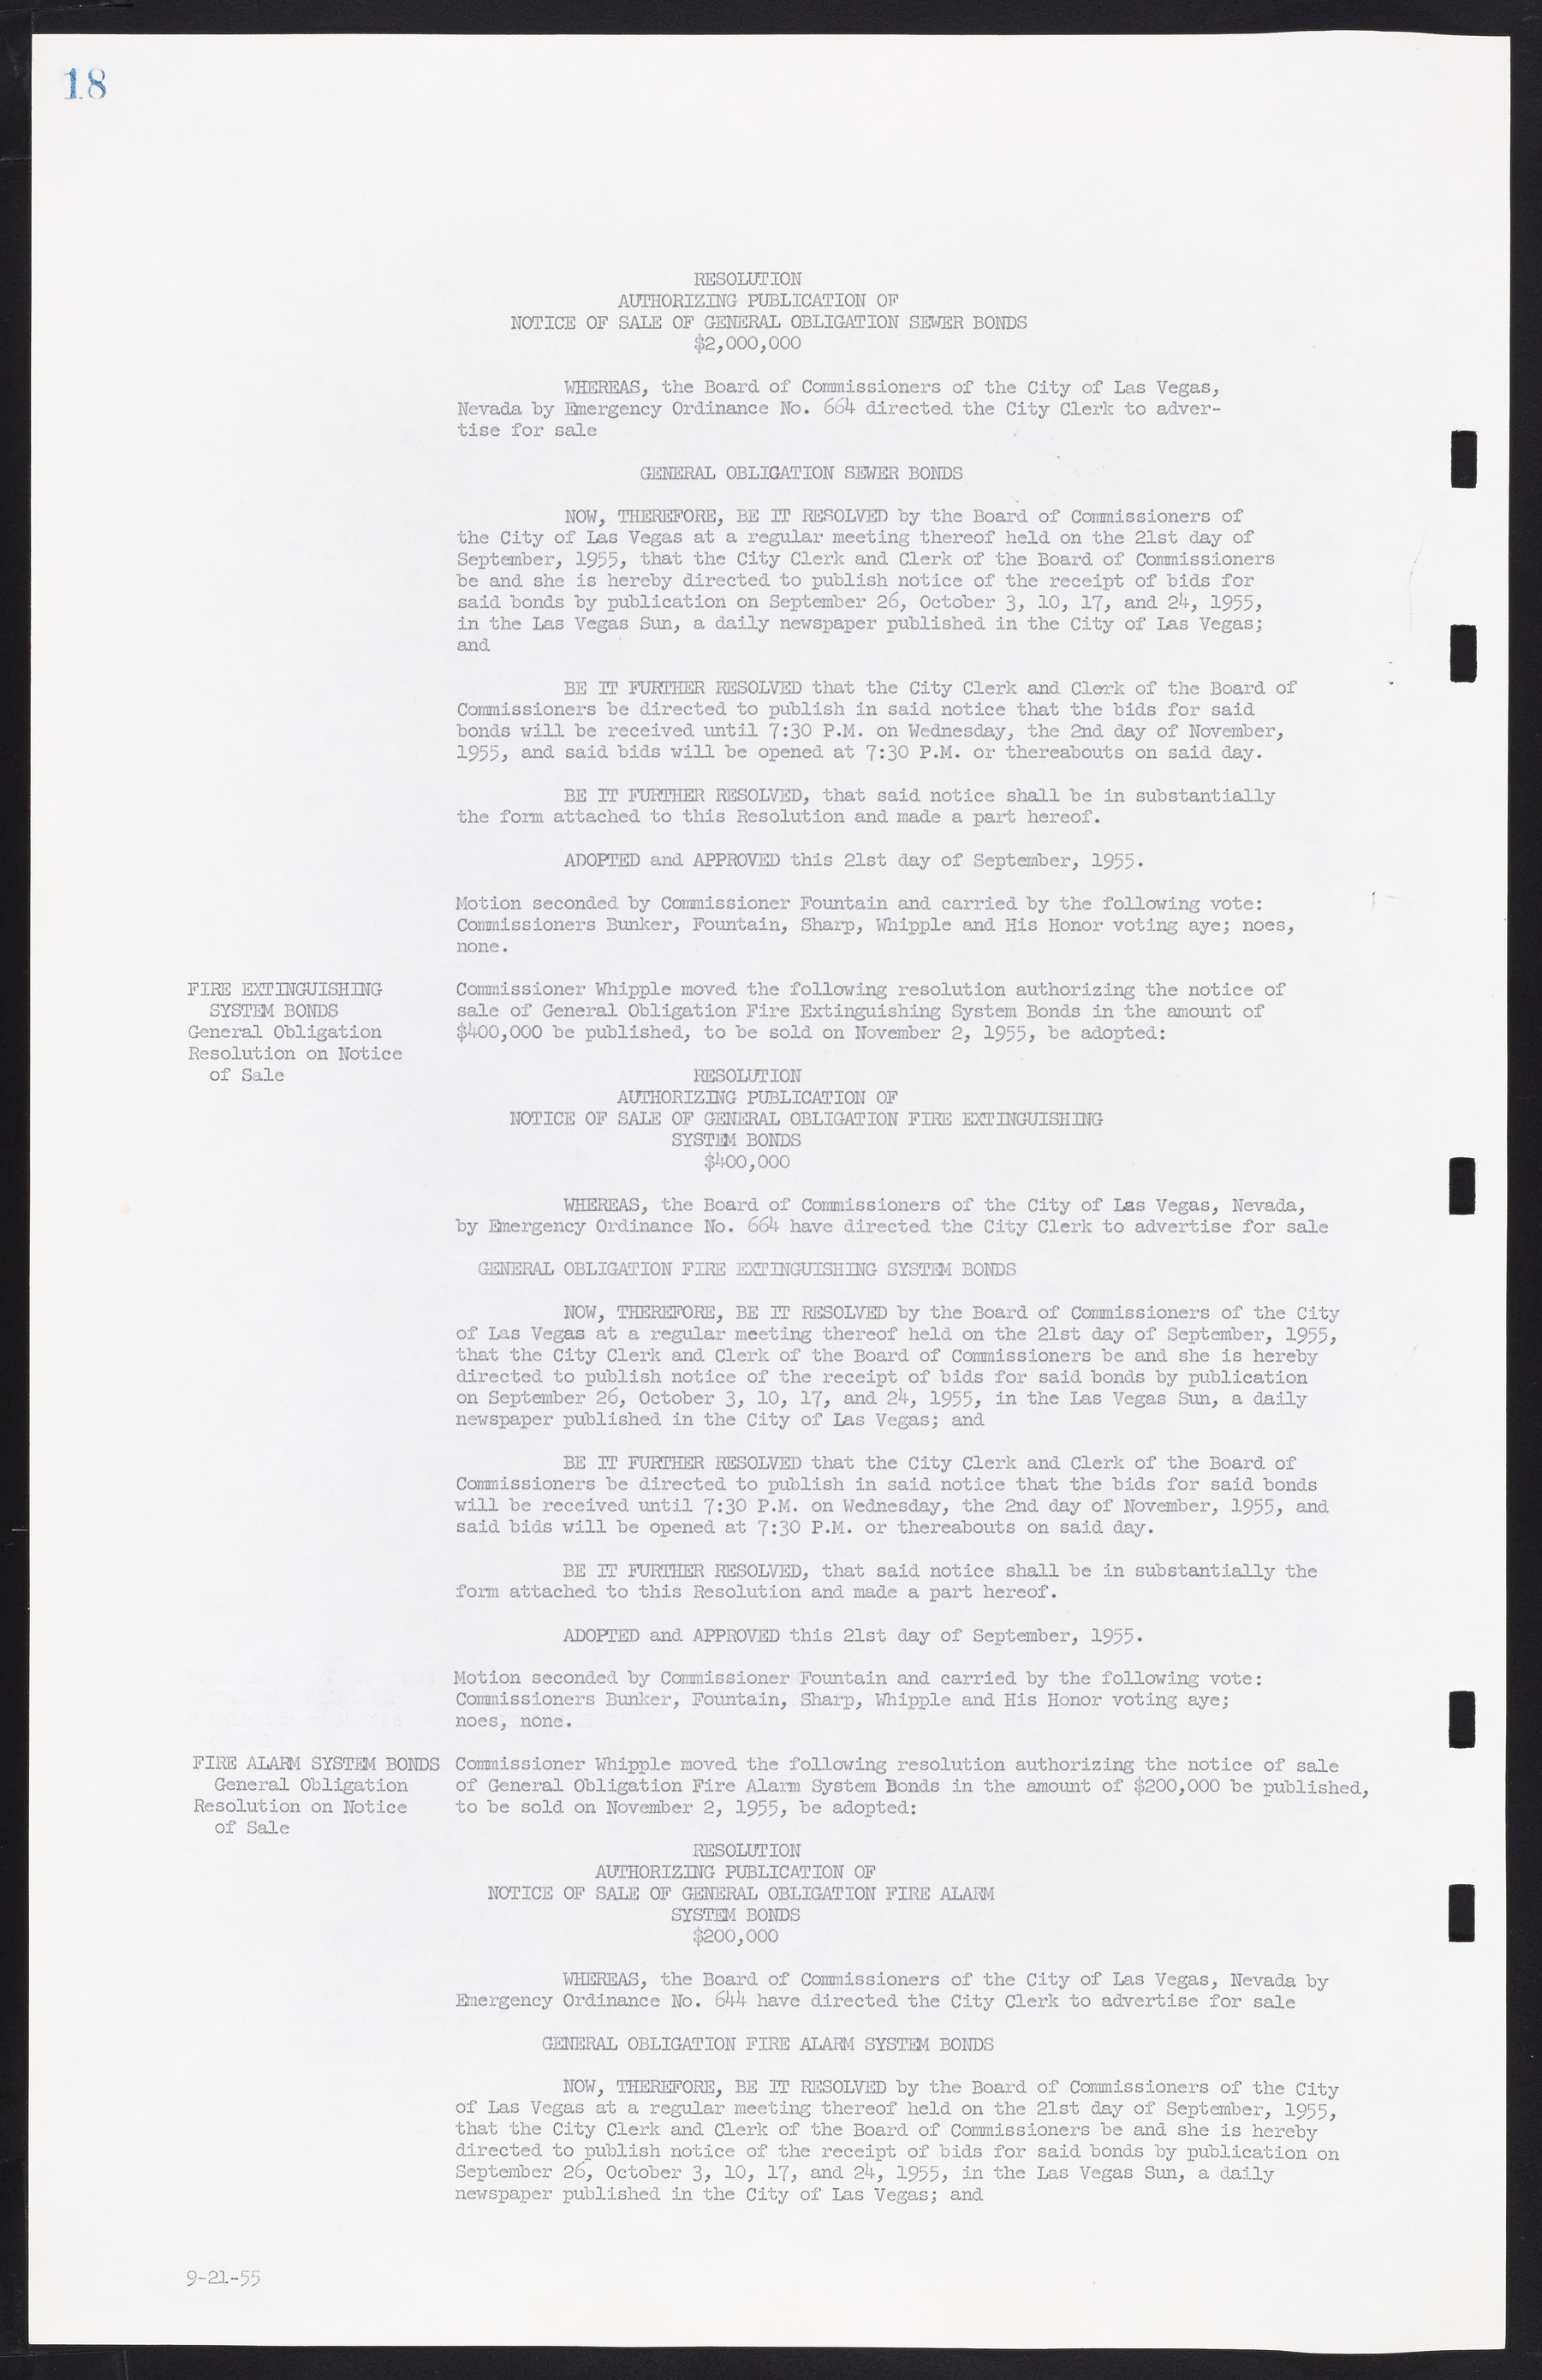 Las Vegas City Commission Minutes, September 21, 1955 to November 20, 1957, lvc000010-24